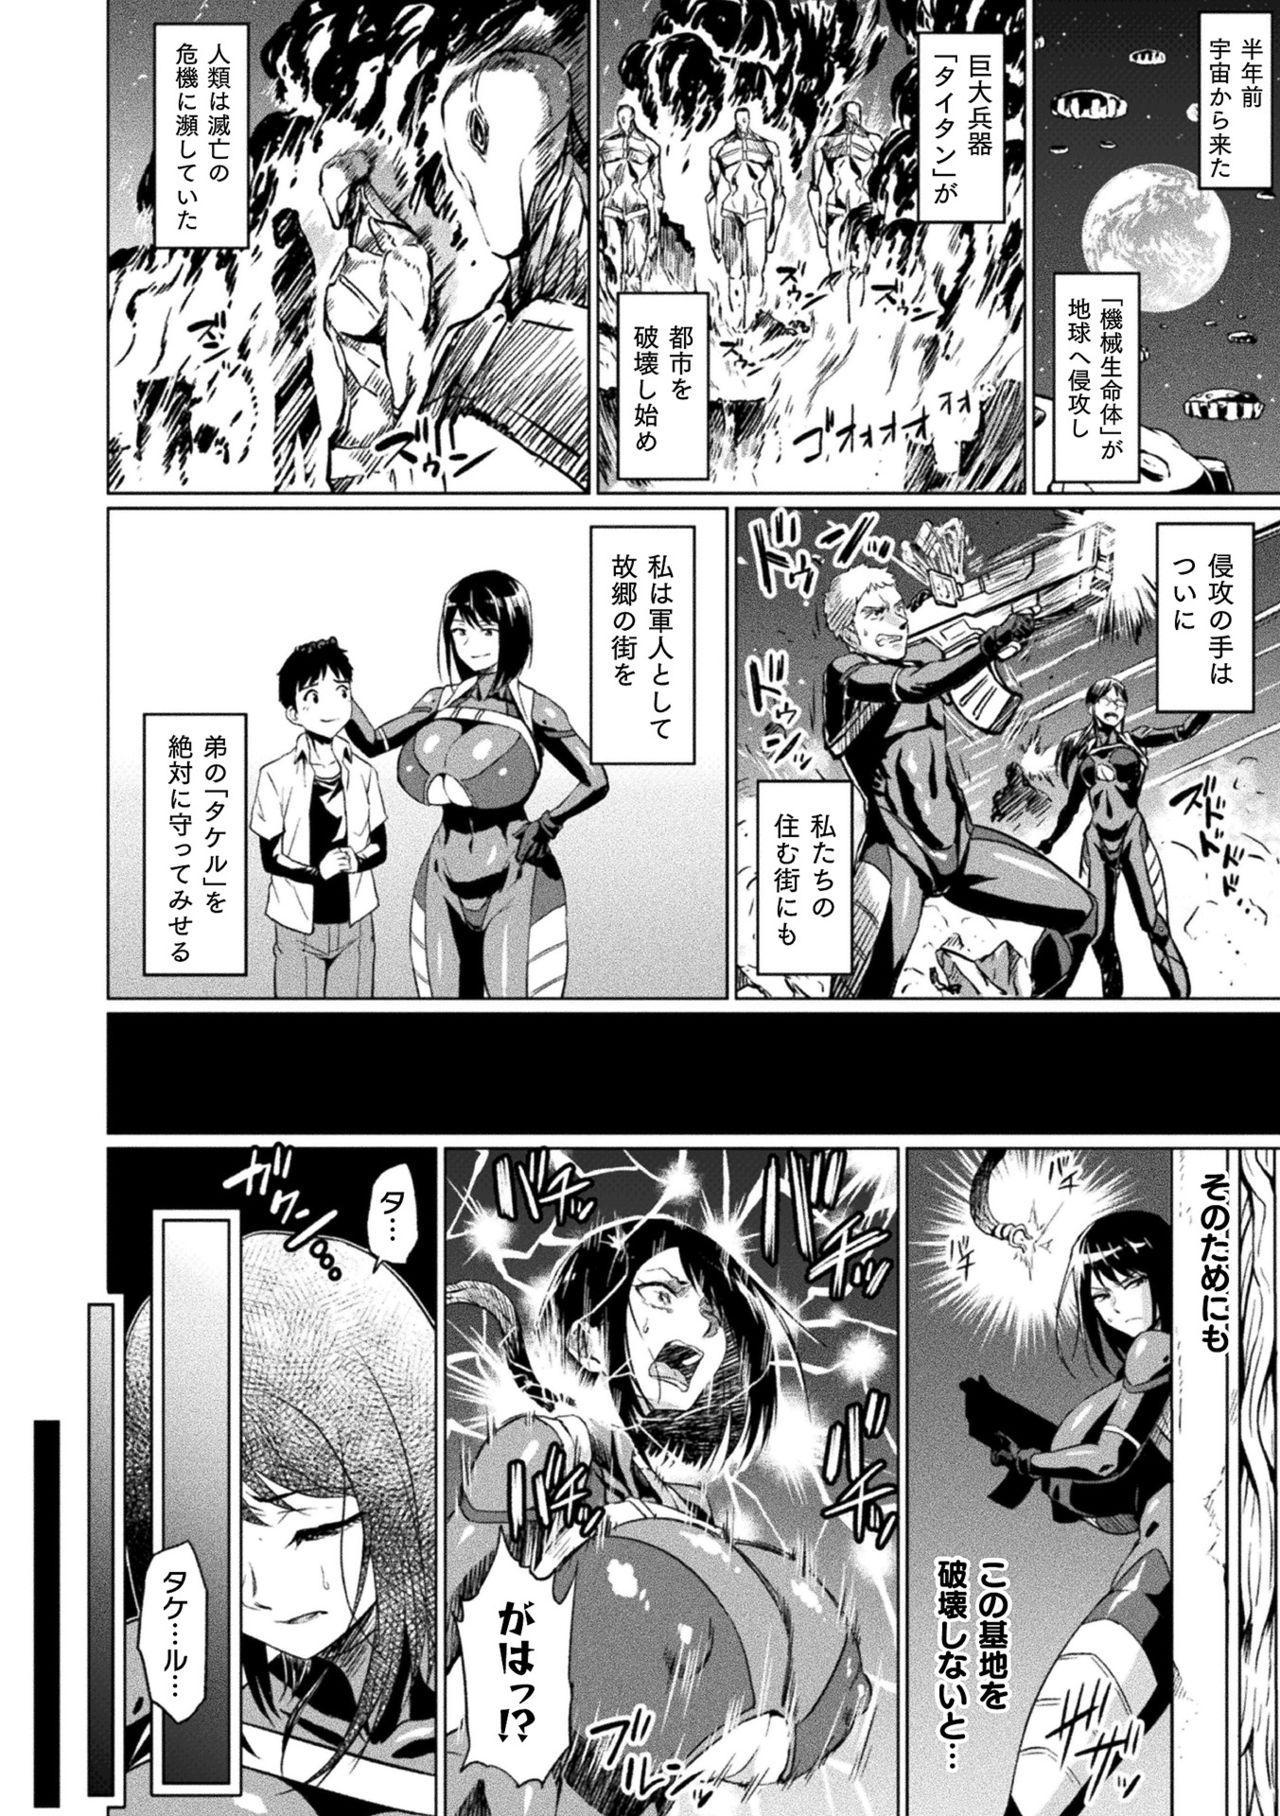 Mofos 2D Comic Magazine - Seitai Unit Kikaikan Vol.1 Dick Sucking - Page 4